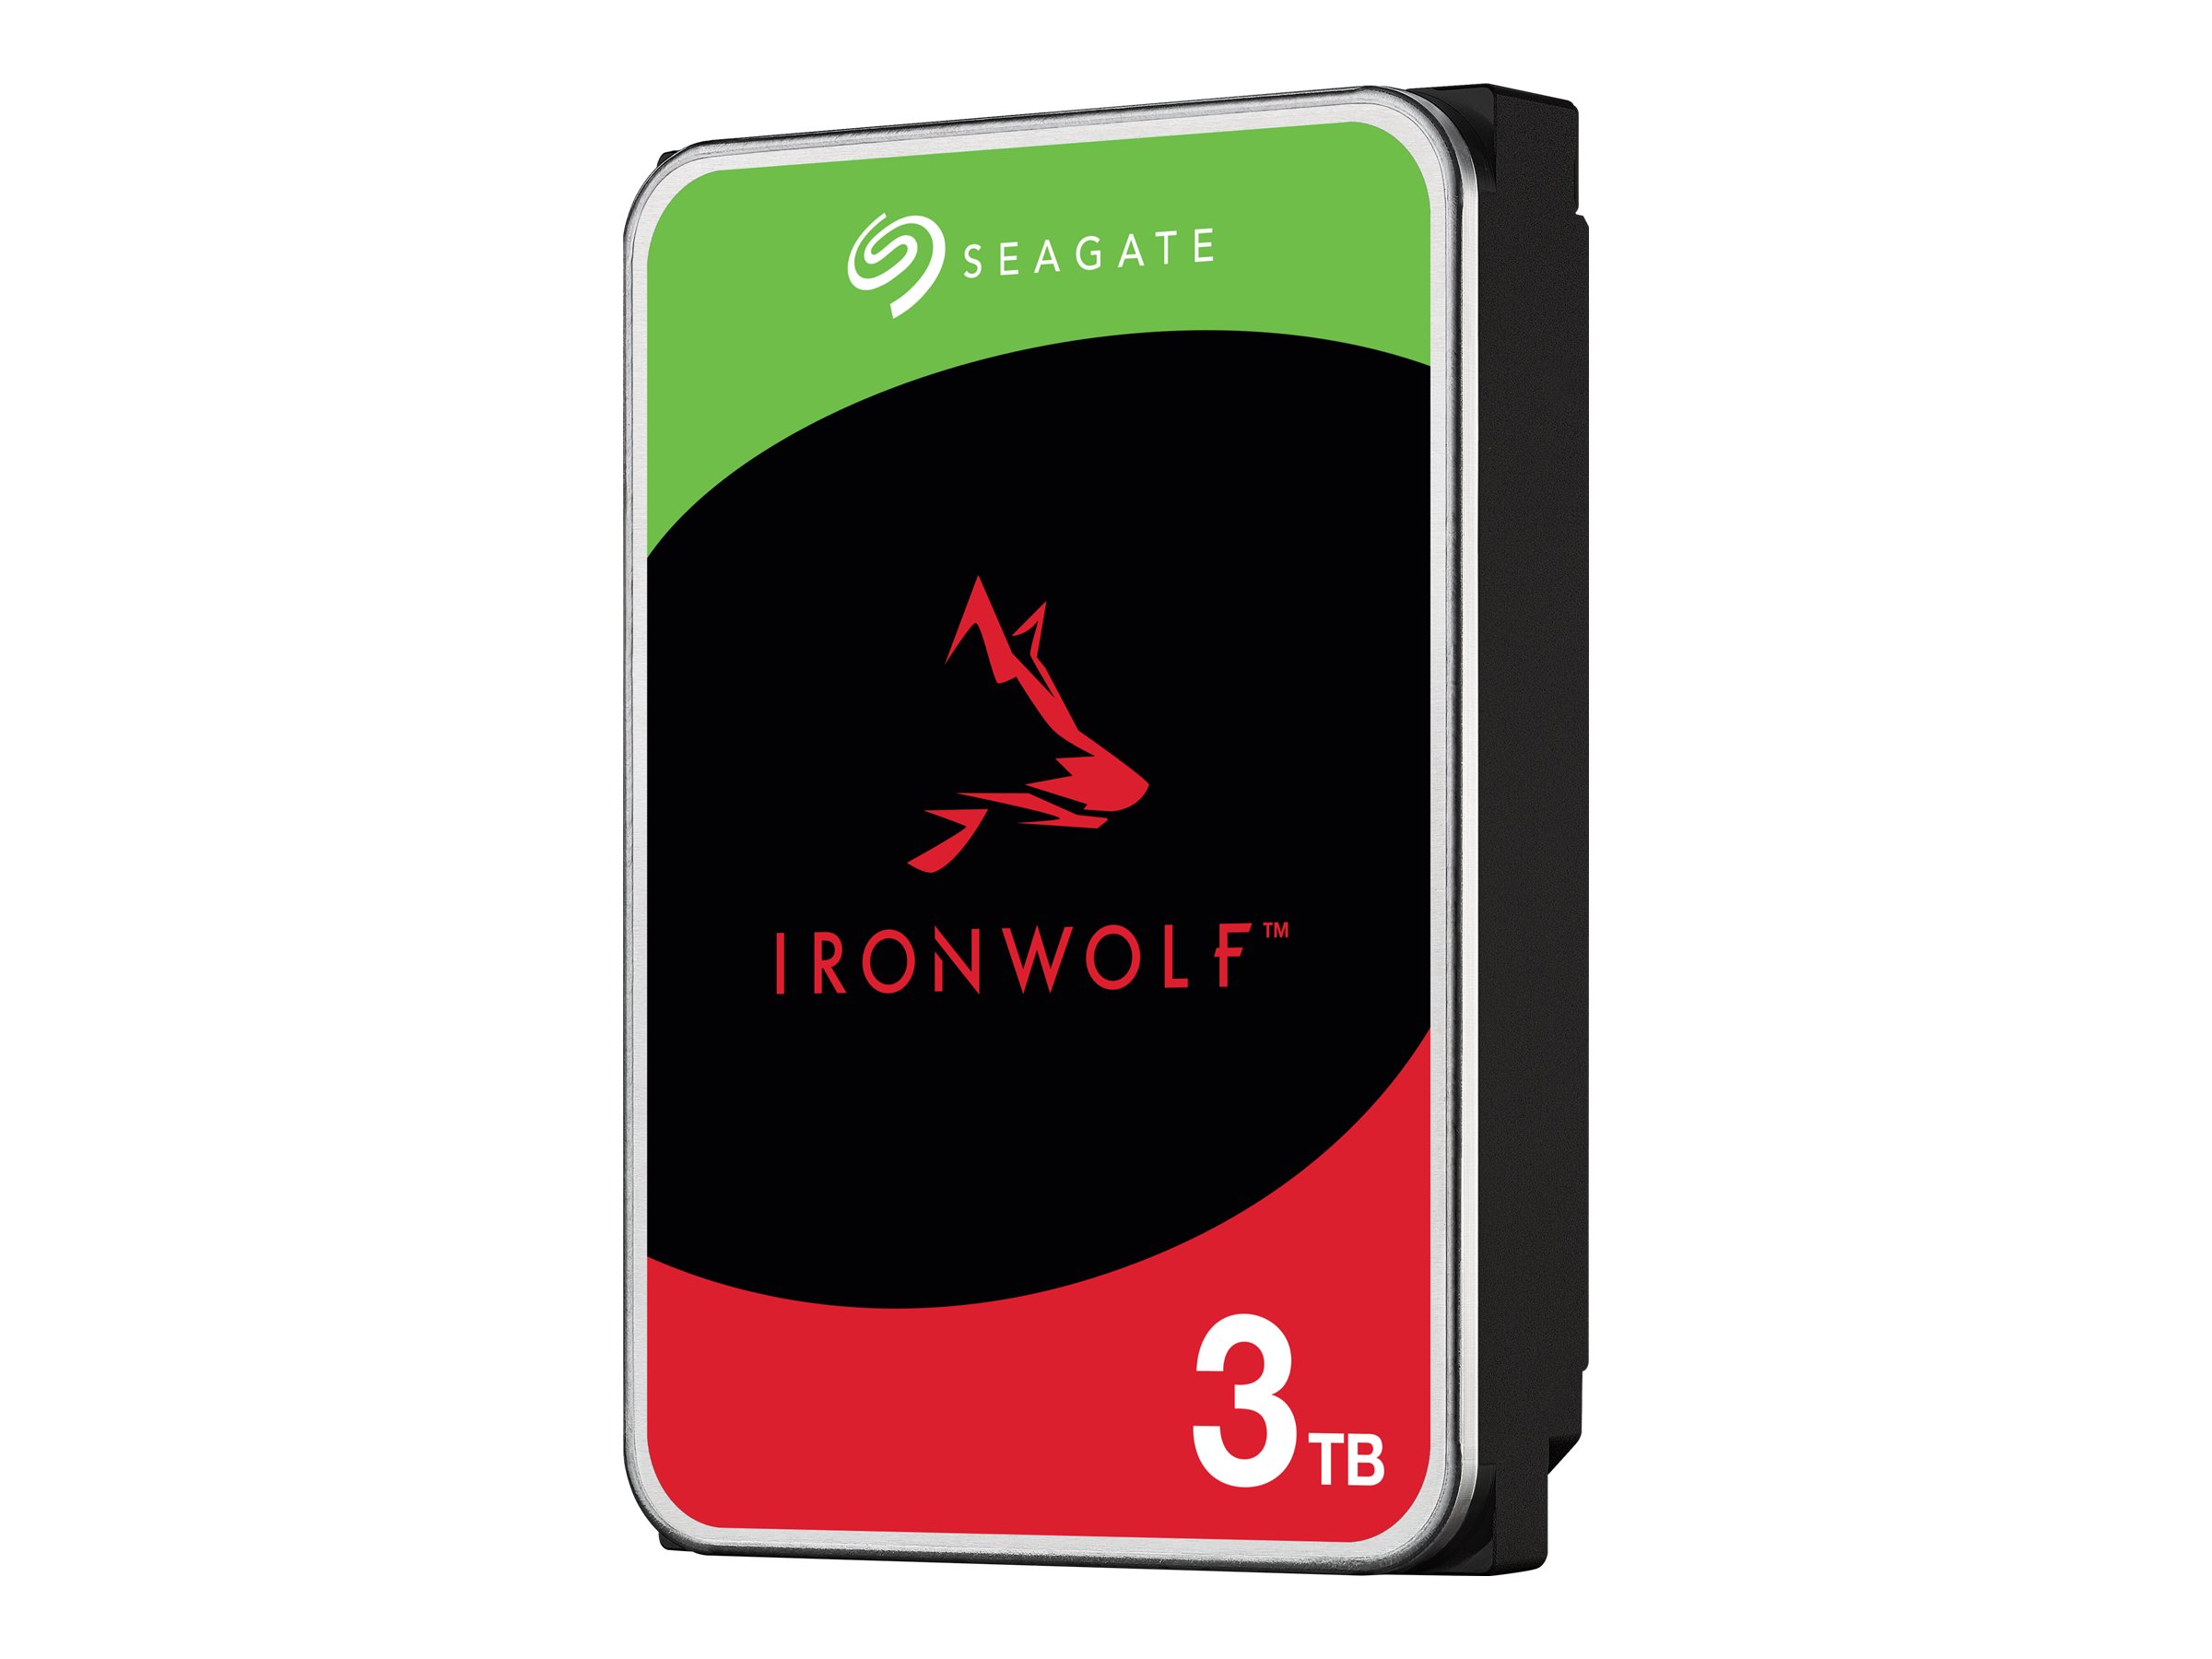 Seagate IronWolf ST3000VN006 - Festplatte - 3 TB